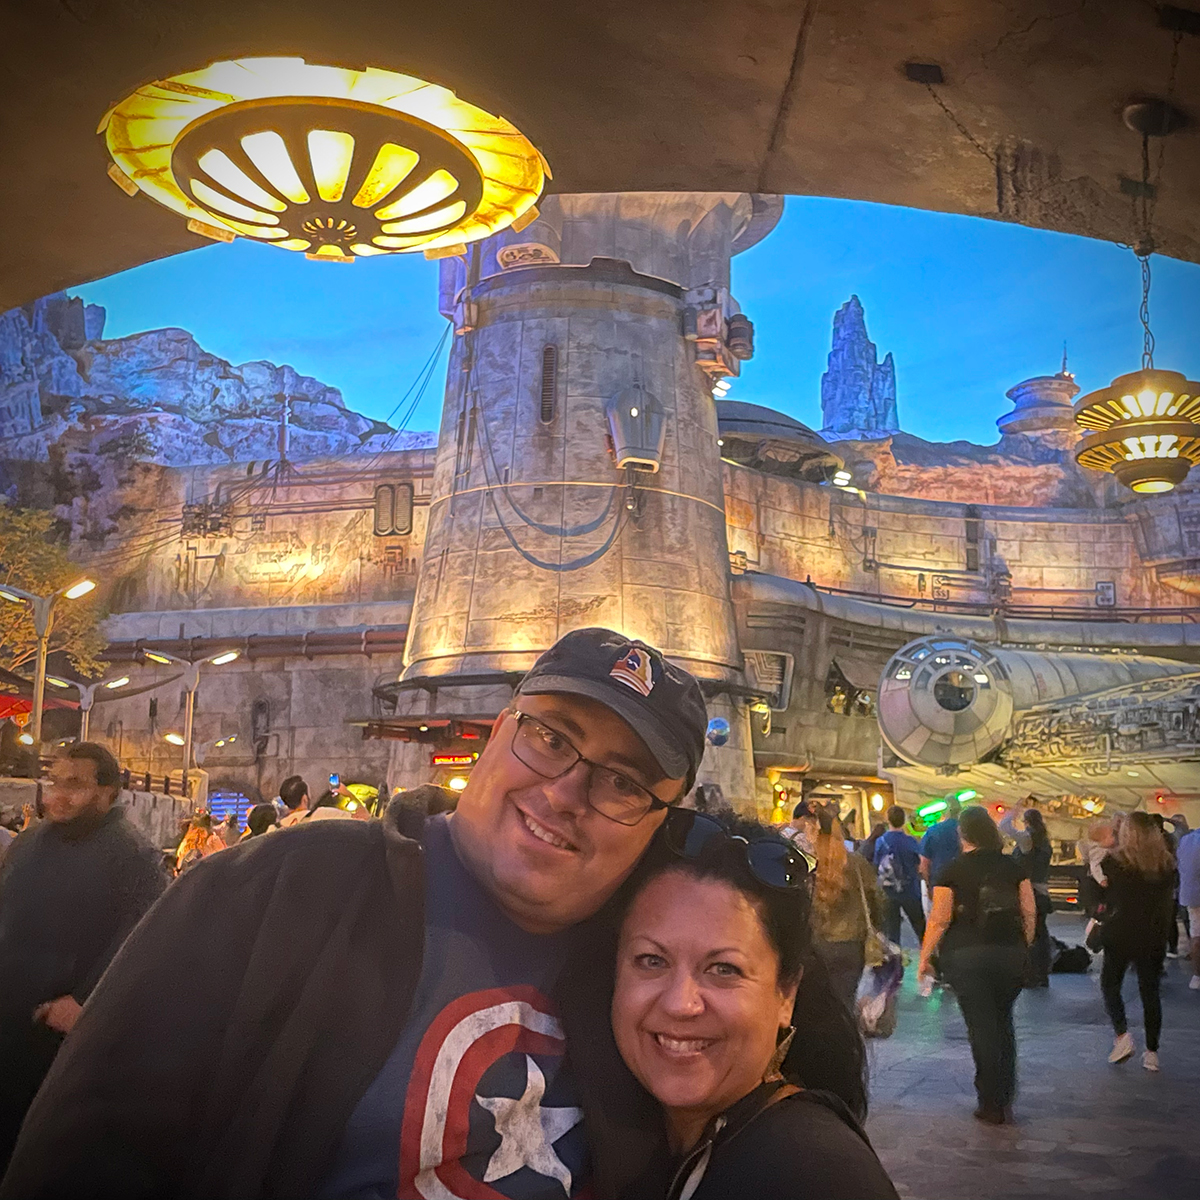 Steve and Rebecca Blackwell at Galaxy's Edge, the Star Wars exhibit in Disneyland, California.